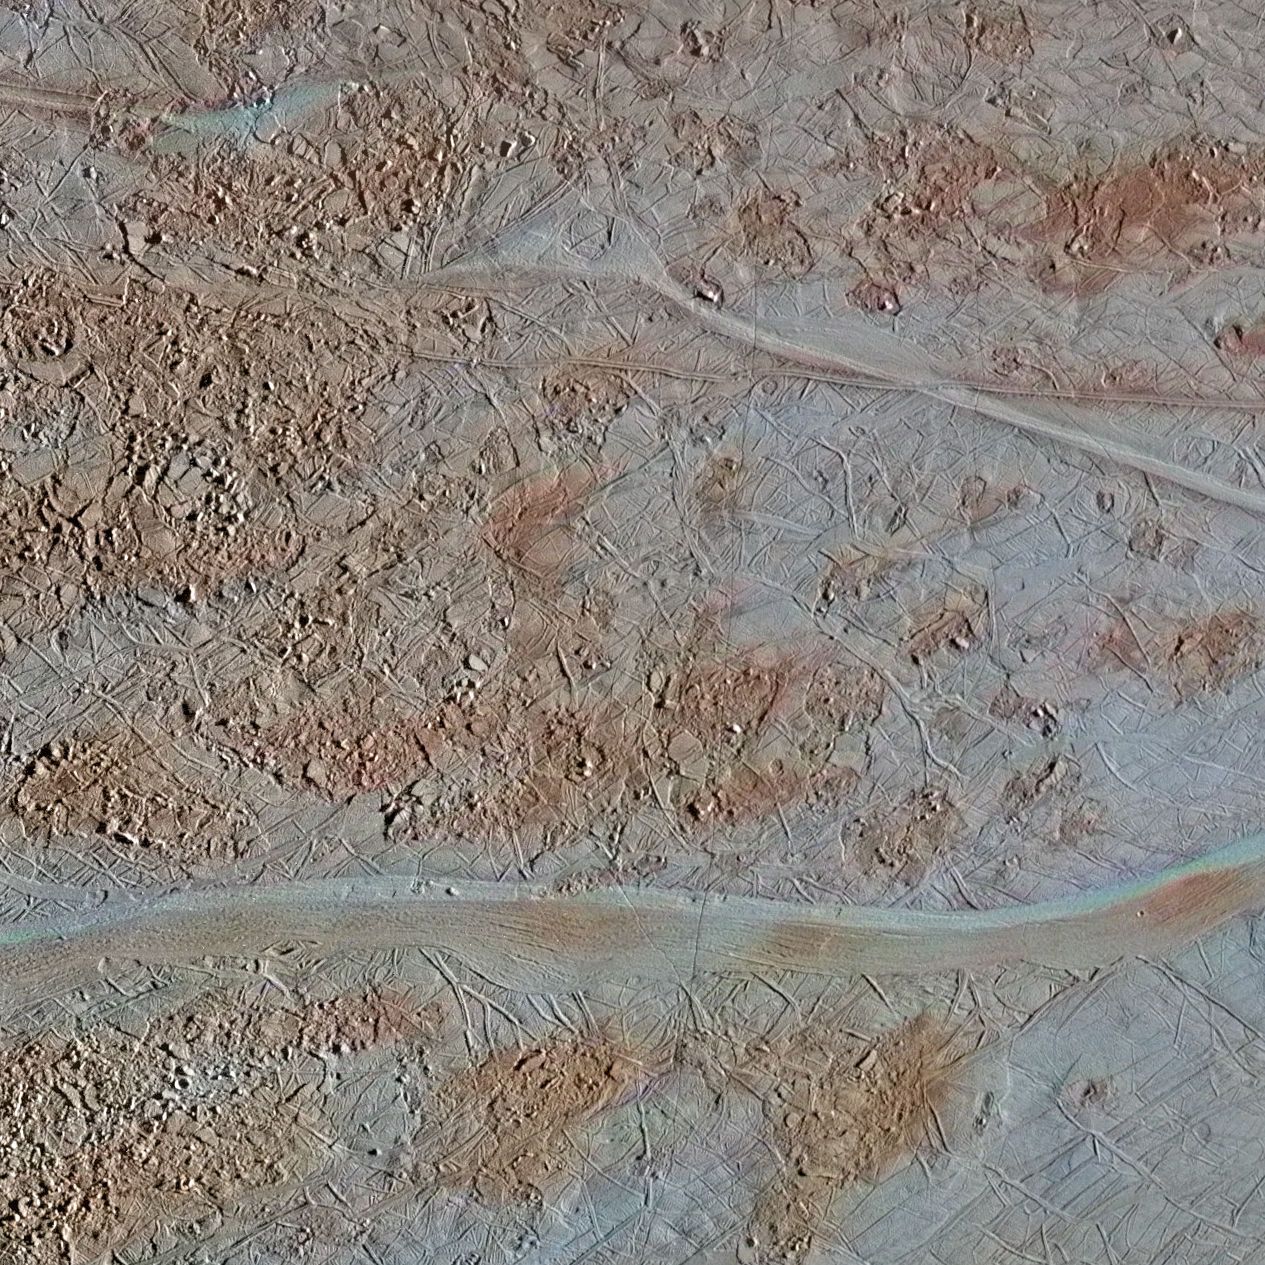 Blöcke aus festgefrorenem Material auf dem Jupitermond Europa. (Credits: NASA / JPL-Caltech / SETI Institute)